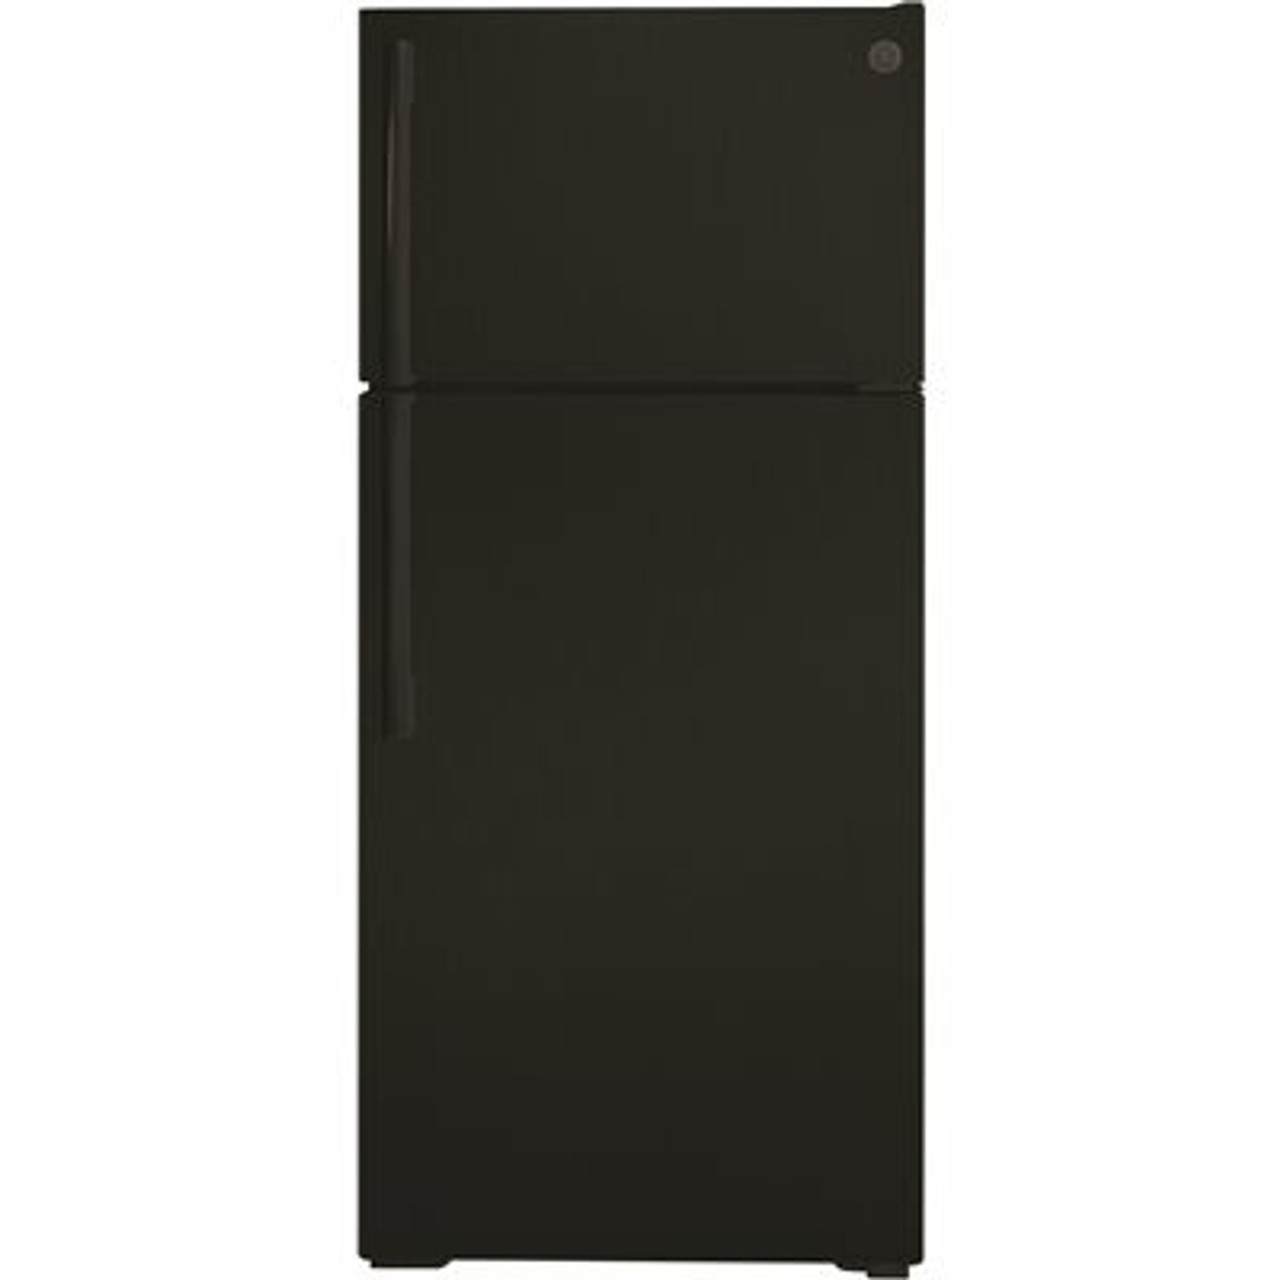 Ge 16.6 Cu. Ft. Top Freezer Refrigerator In Black, Energy Star